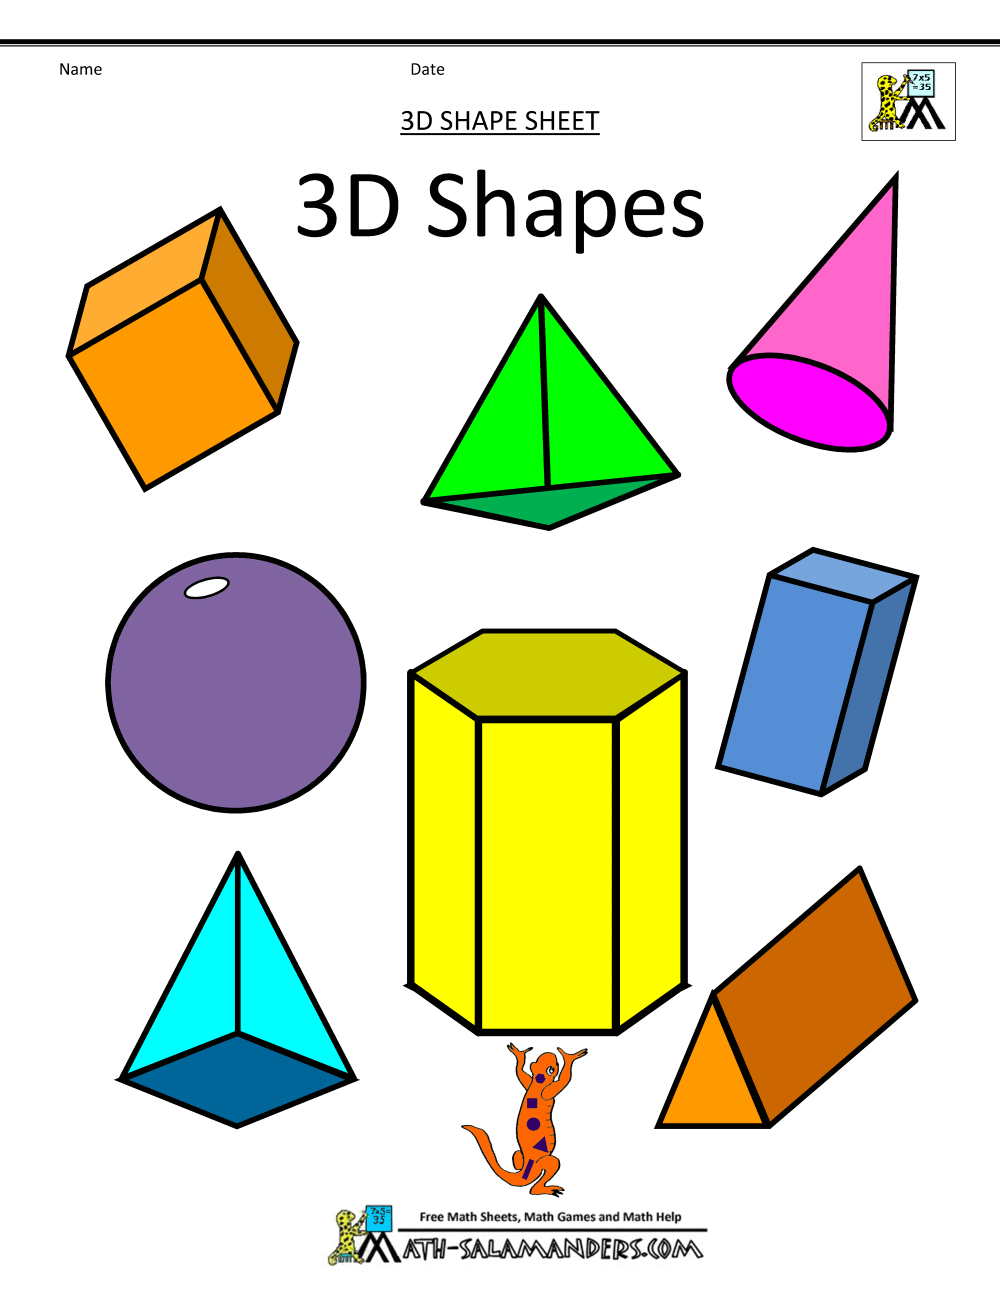 http://www.math-salamanders.com/image-files/3d-geometric-shapes-assorted-col.gif